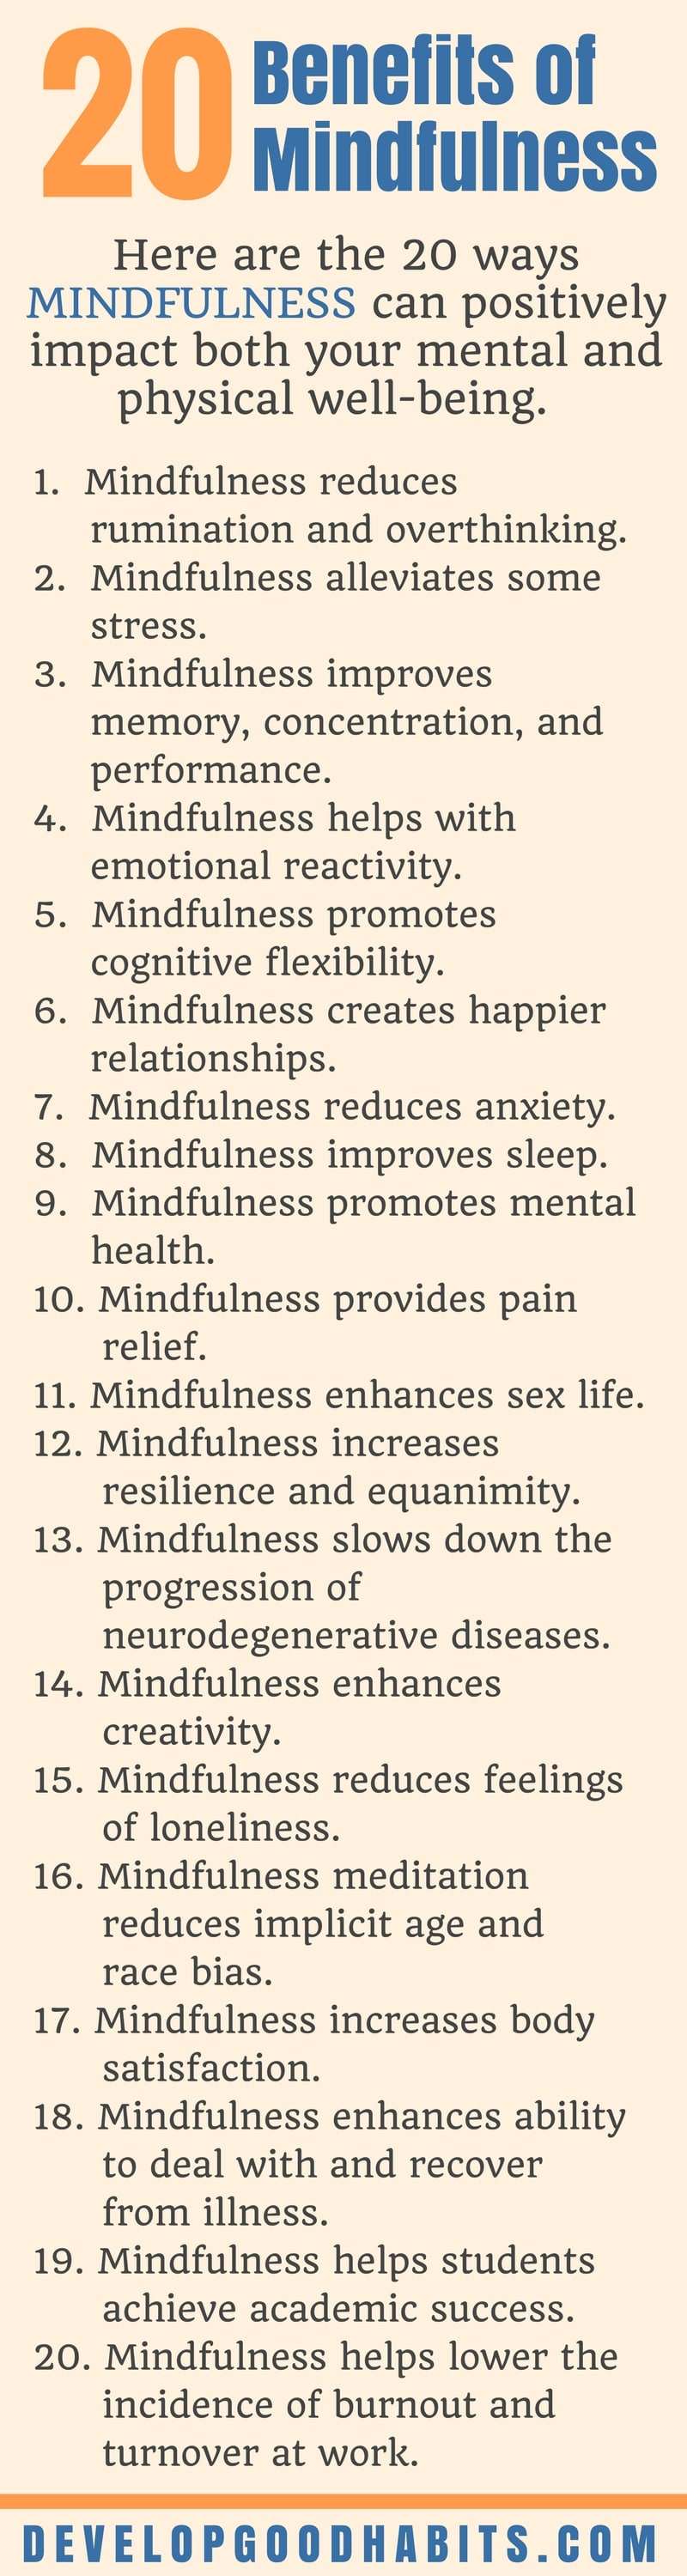 20 Benefits of Mindfulness